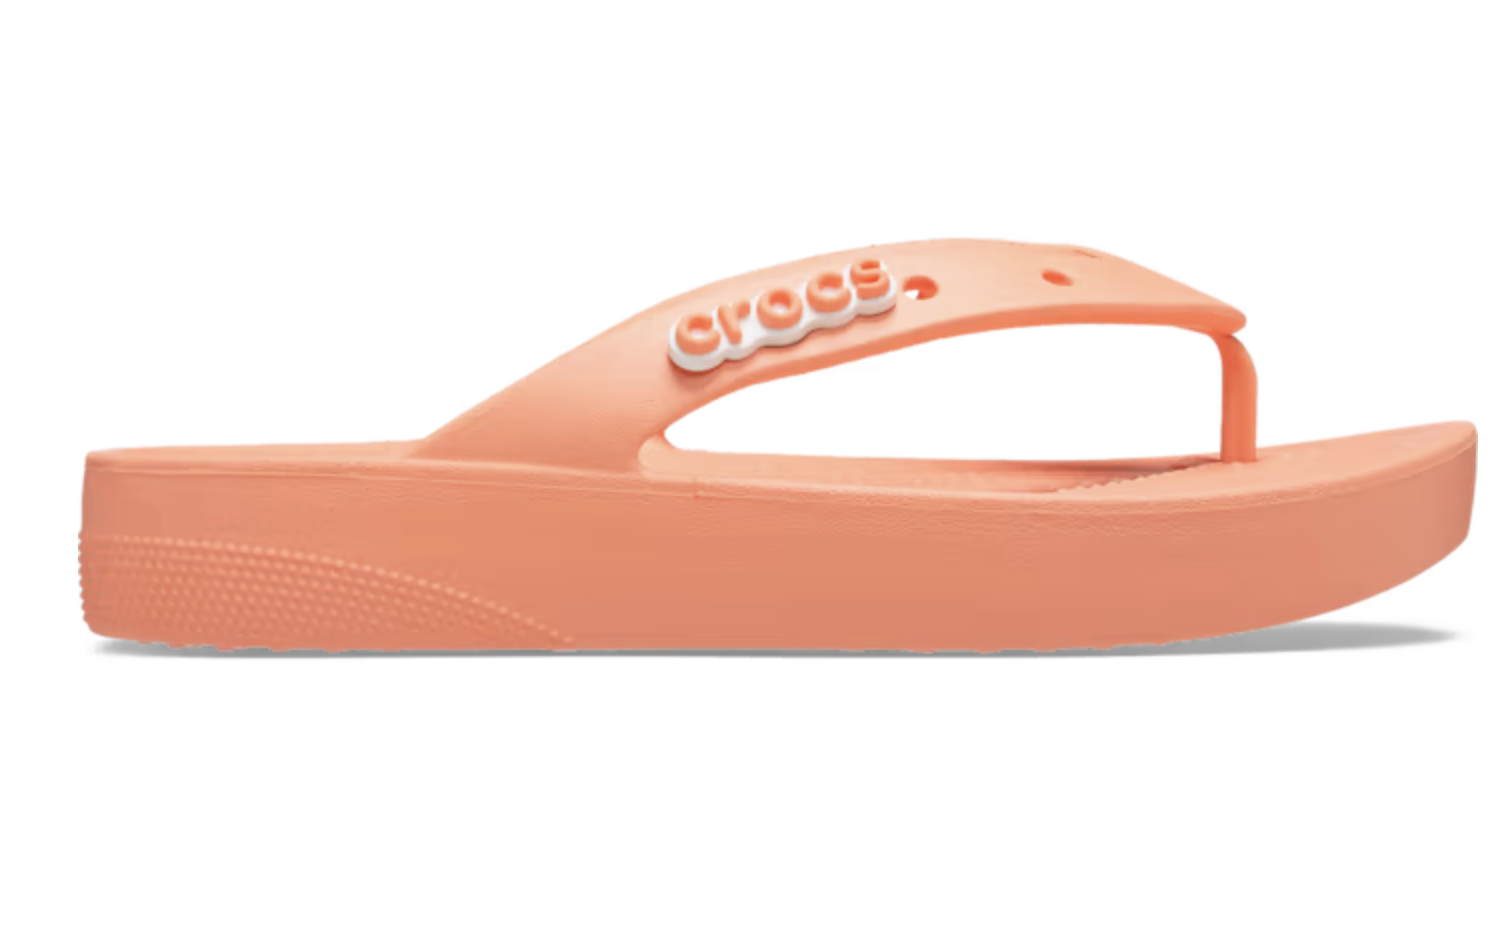 Crocs: Up to 50% Off Sale, CLASSIC PLATFORM FLIP (Papaya) $17.50 + Free Shipping on $50